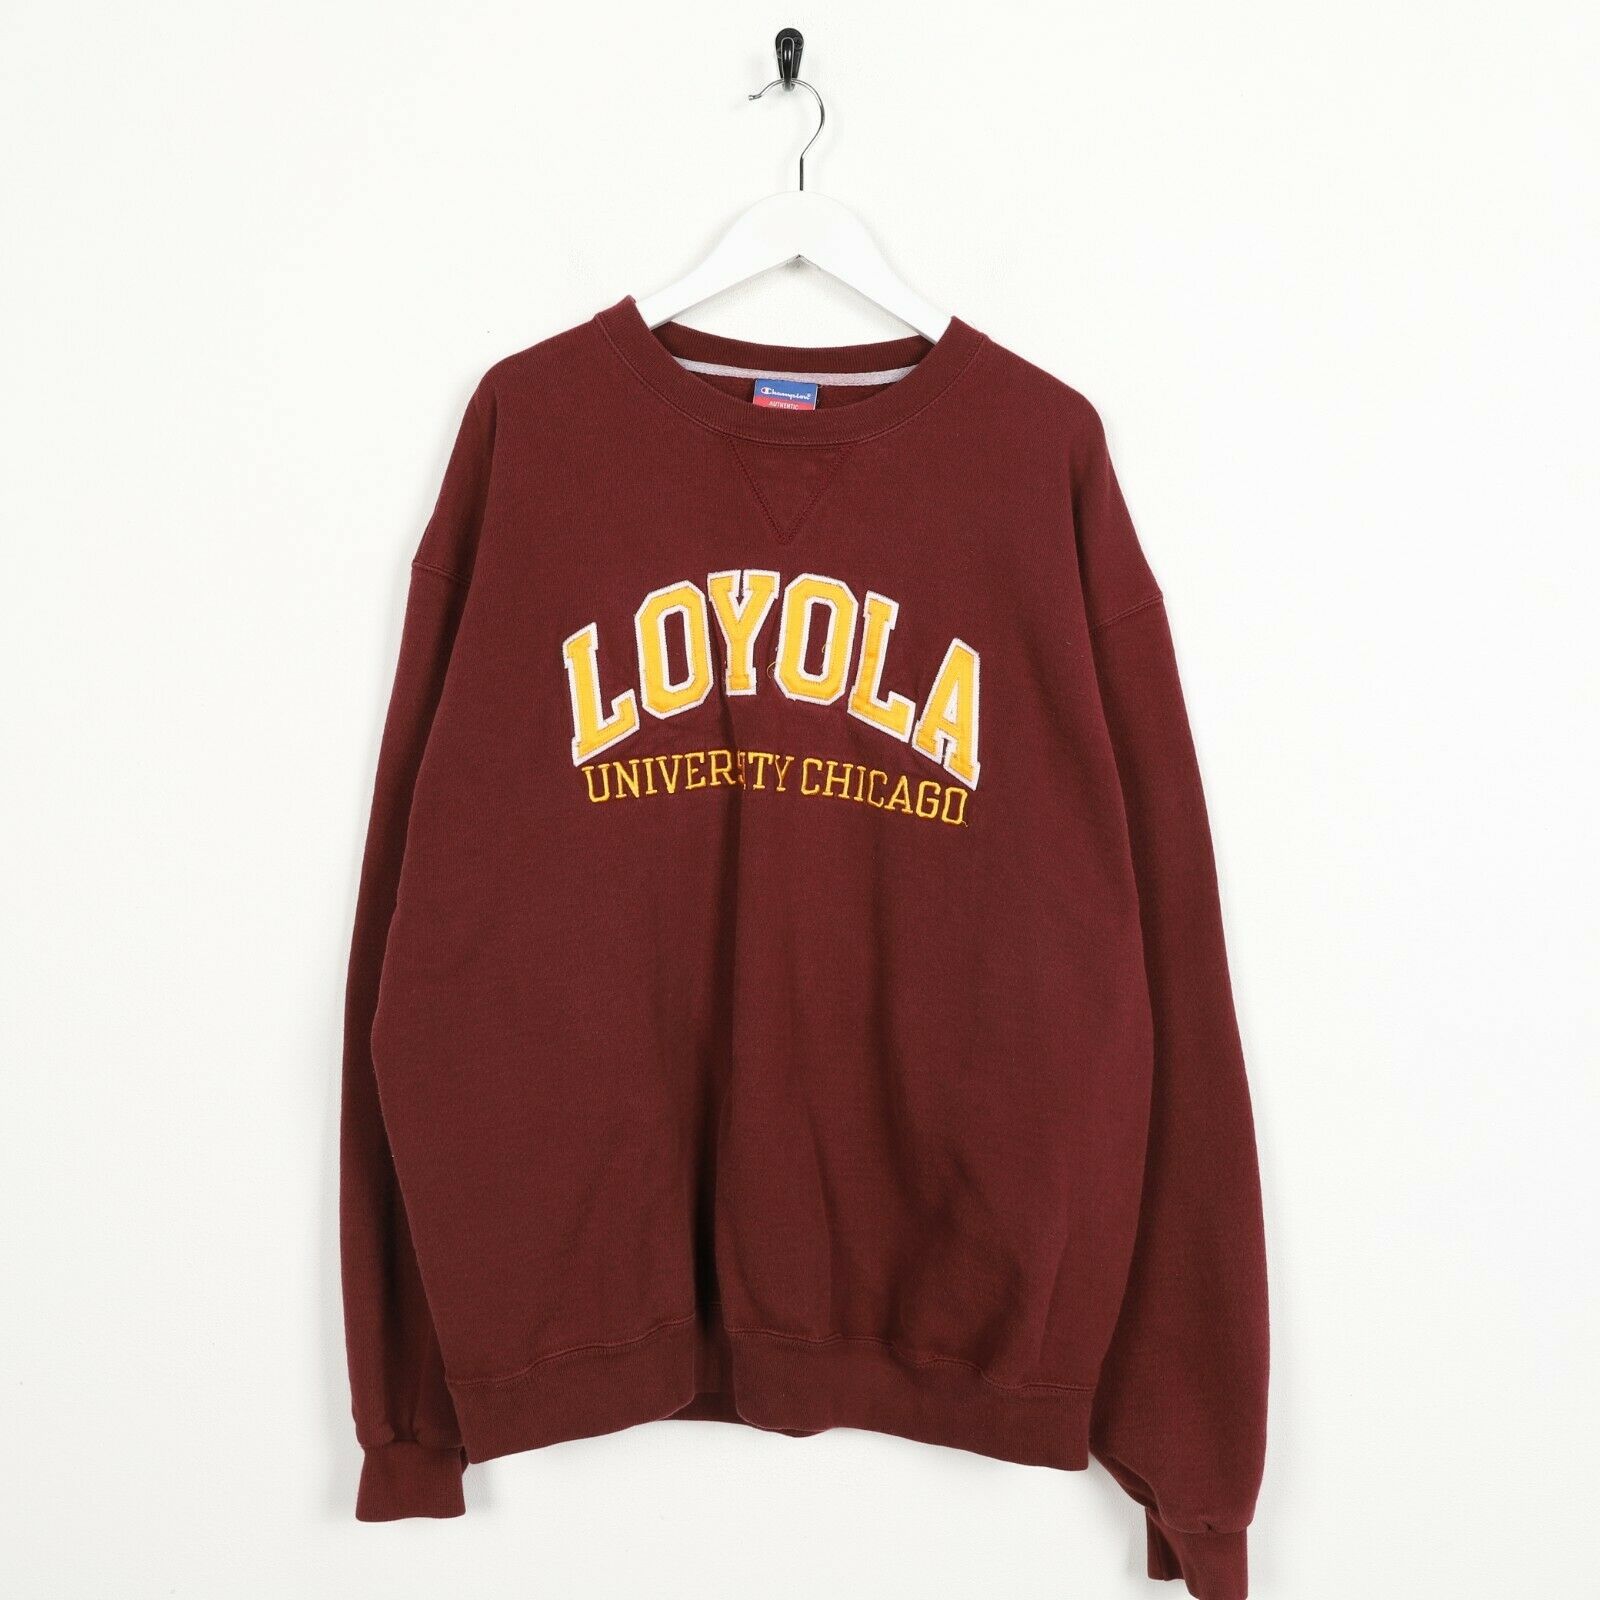 Champion LOYOLA LAW Sweatshirt Pullover Bordeaux XLarge freeshipping - Unique Pieces Vintage